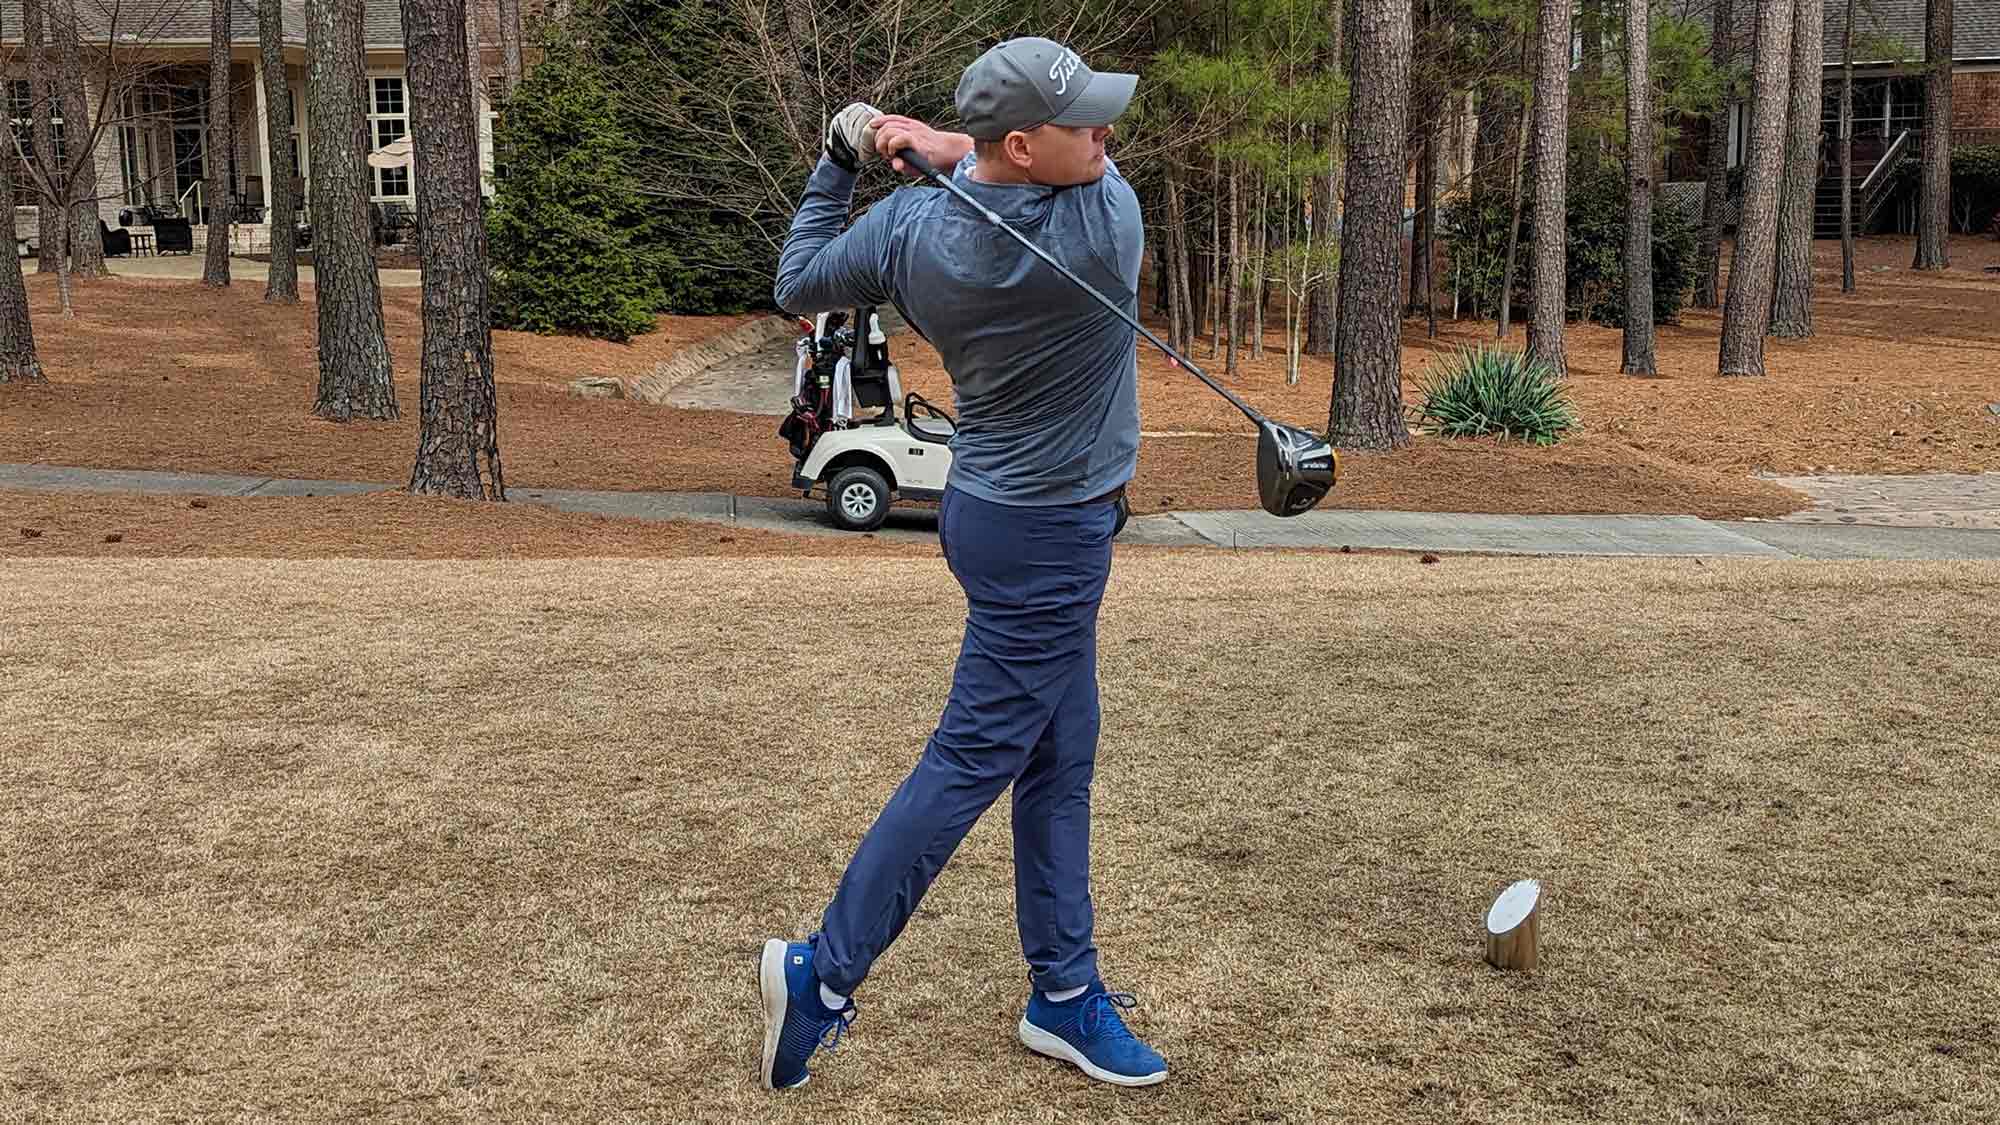 Chris Shultz playing golf